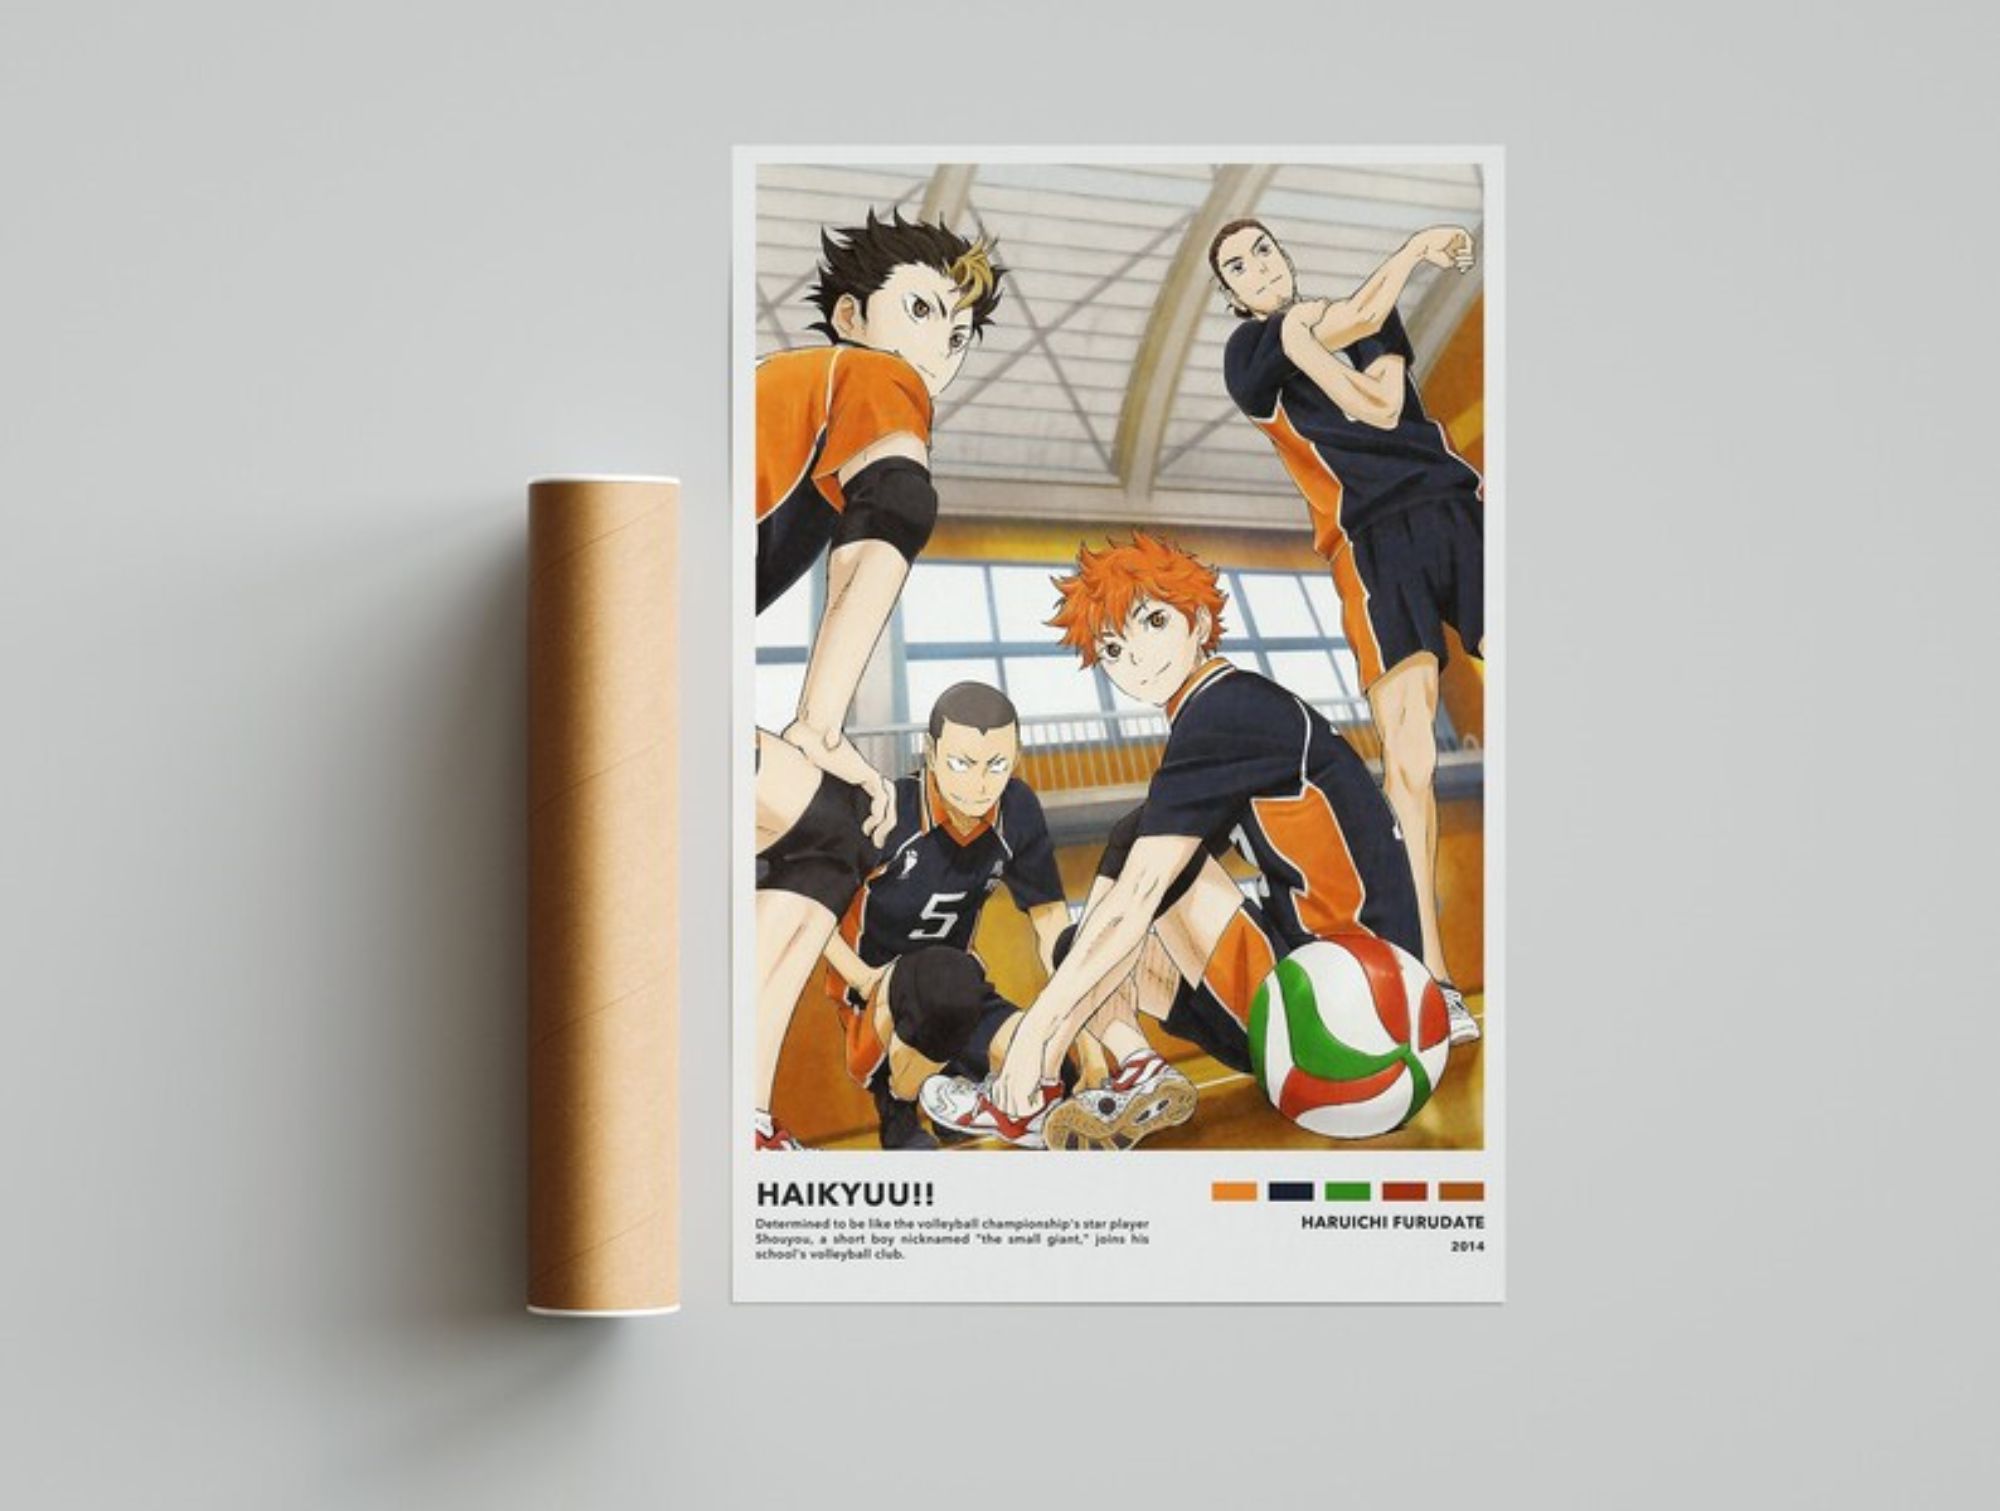 Japan Anime Haikyuu!! Volleyball Boy Cartoon Canvas Painting Posters Wall  Decor